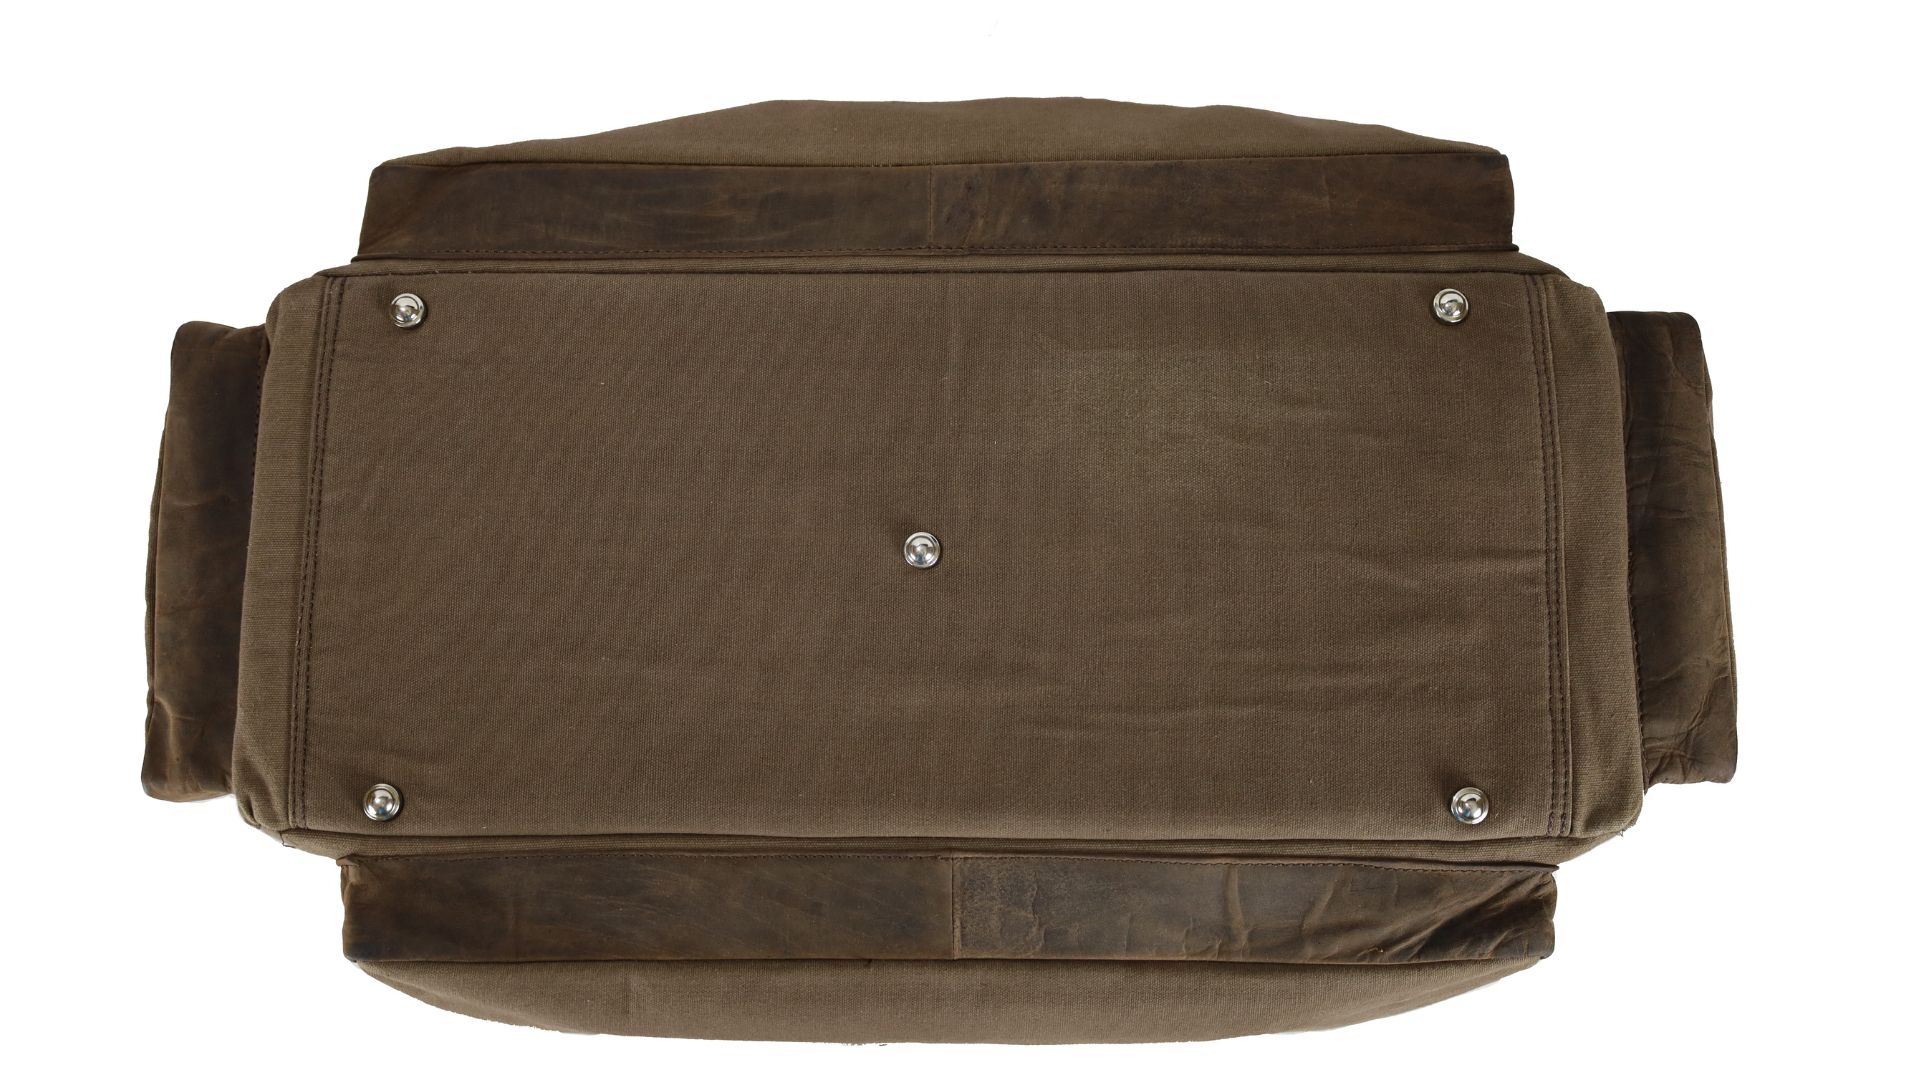 Boddington Gear Waxed Canvas with Vintage Buffalo Leather Trim Range Bag